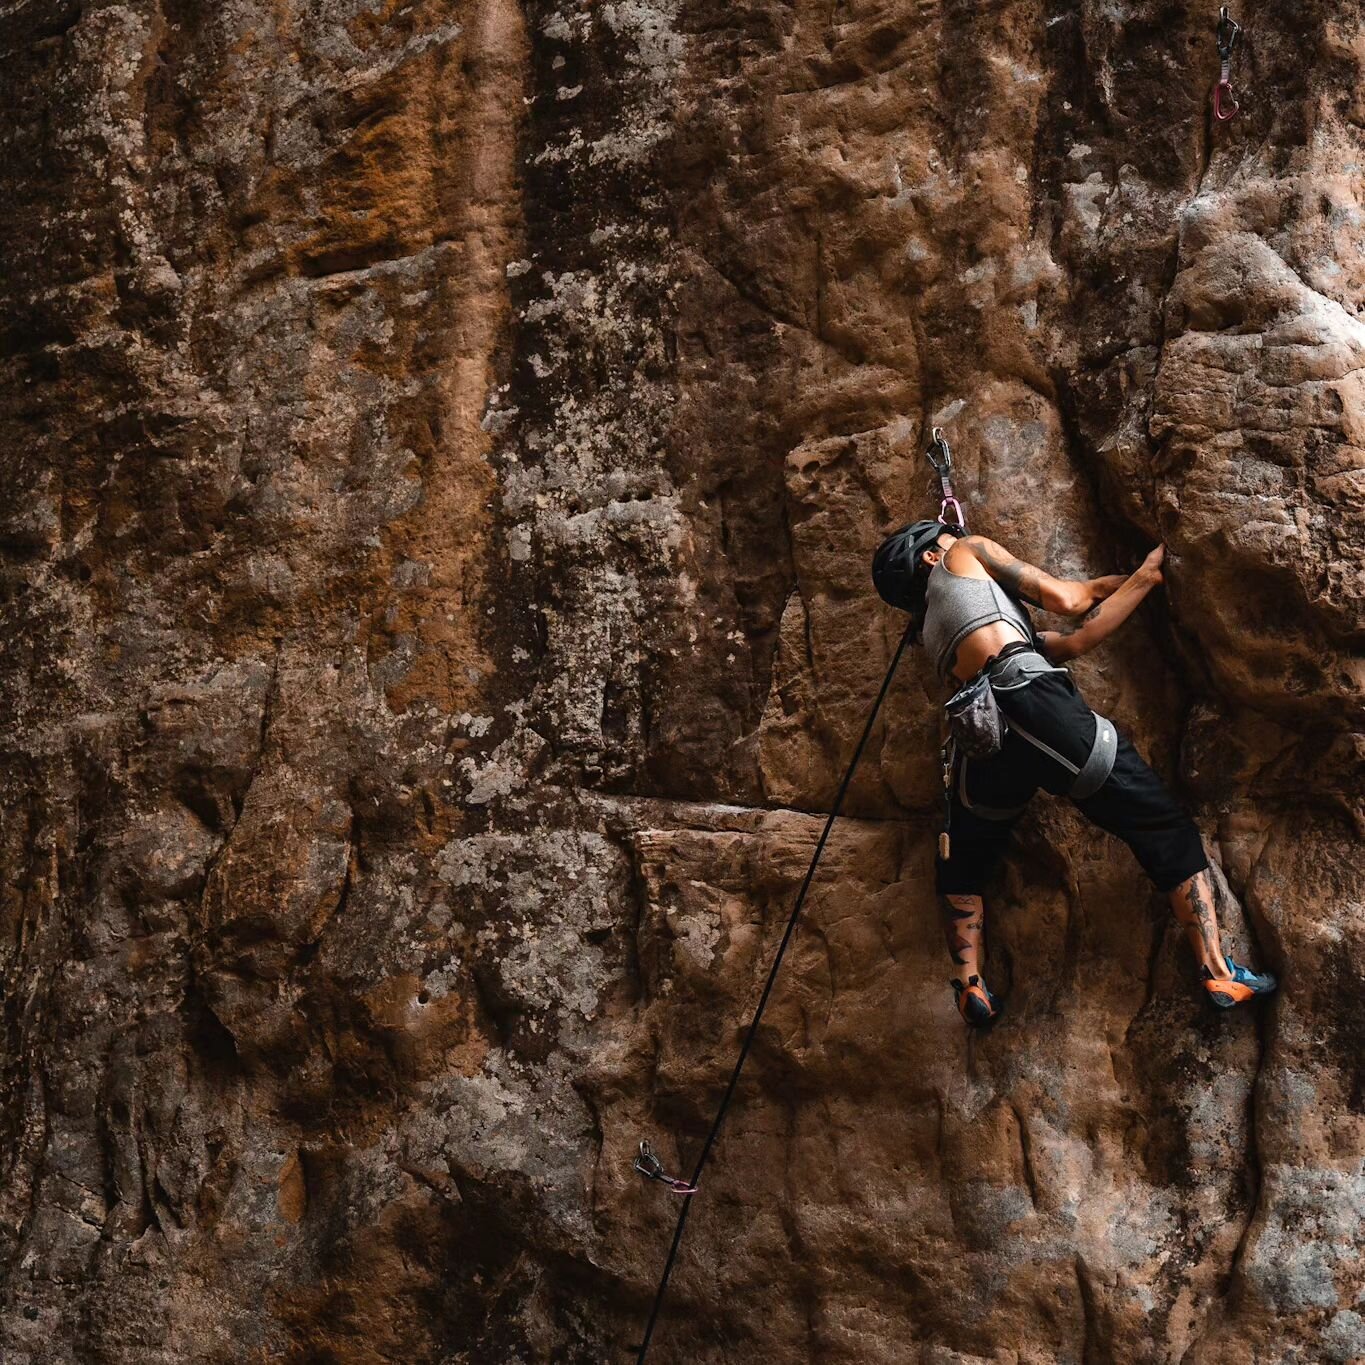 ClimbingQTs president caught in the act 👀 @fruityhoneybee navigating bulges on Dyuritte rock.

📸 @earthymedia
Benji on belay
🔗 @climbing_anchors